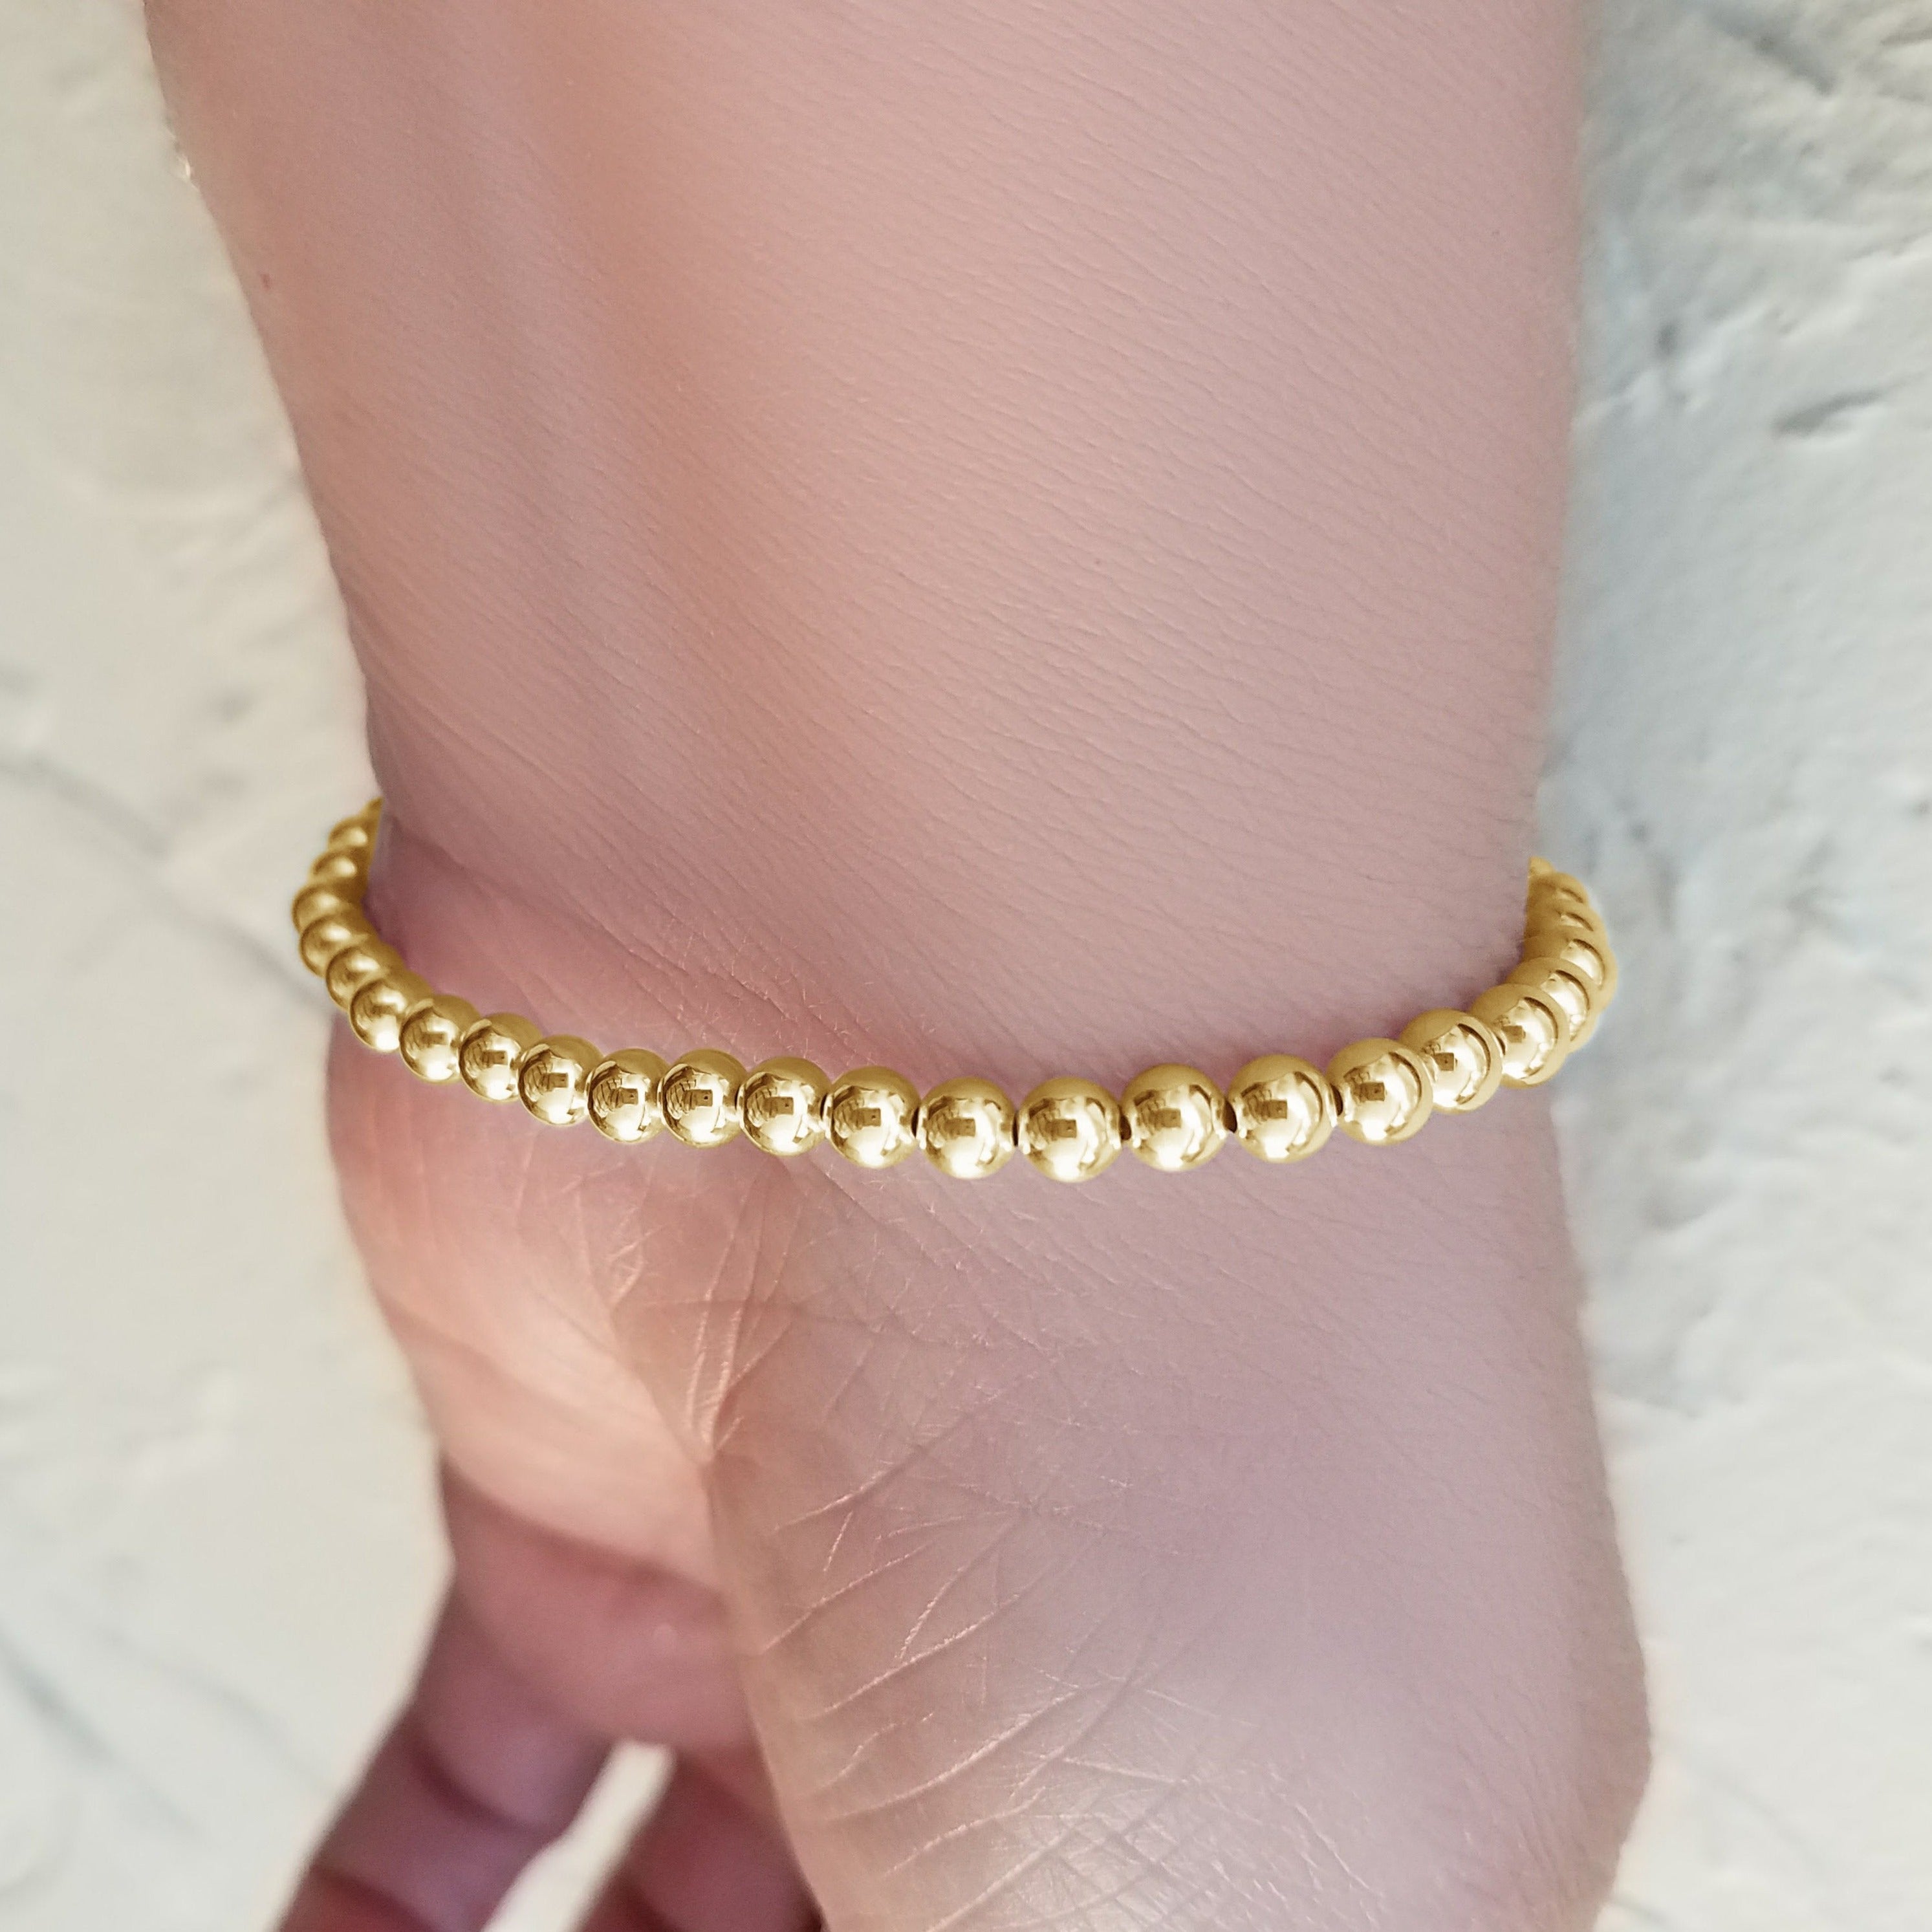 bead bracelet handmade in los angeles- Alef Bet Jewelry by Paula